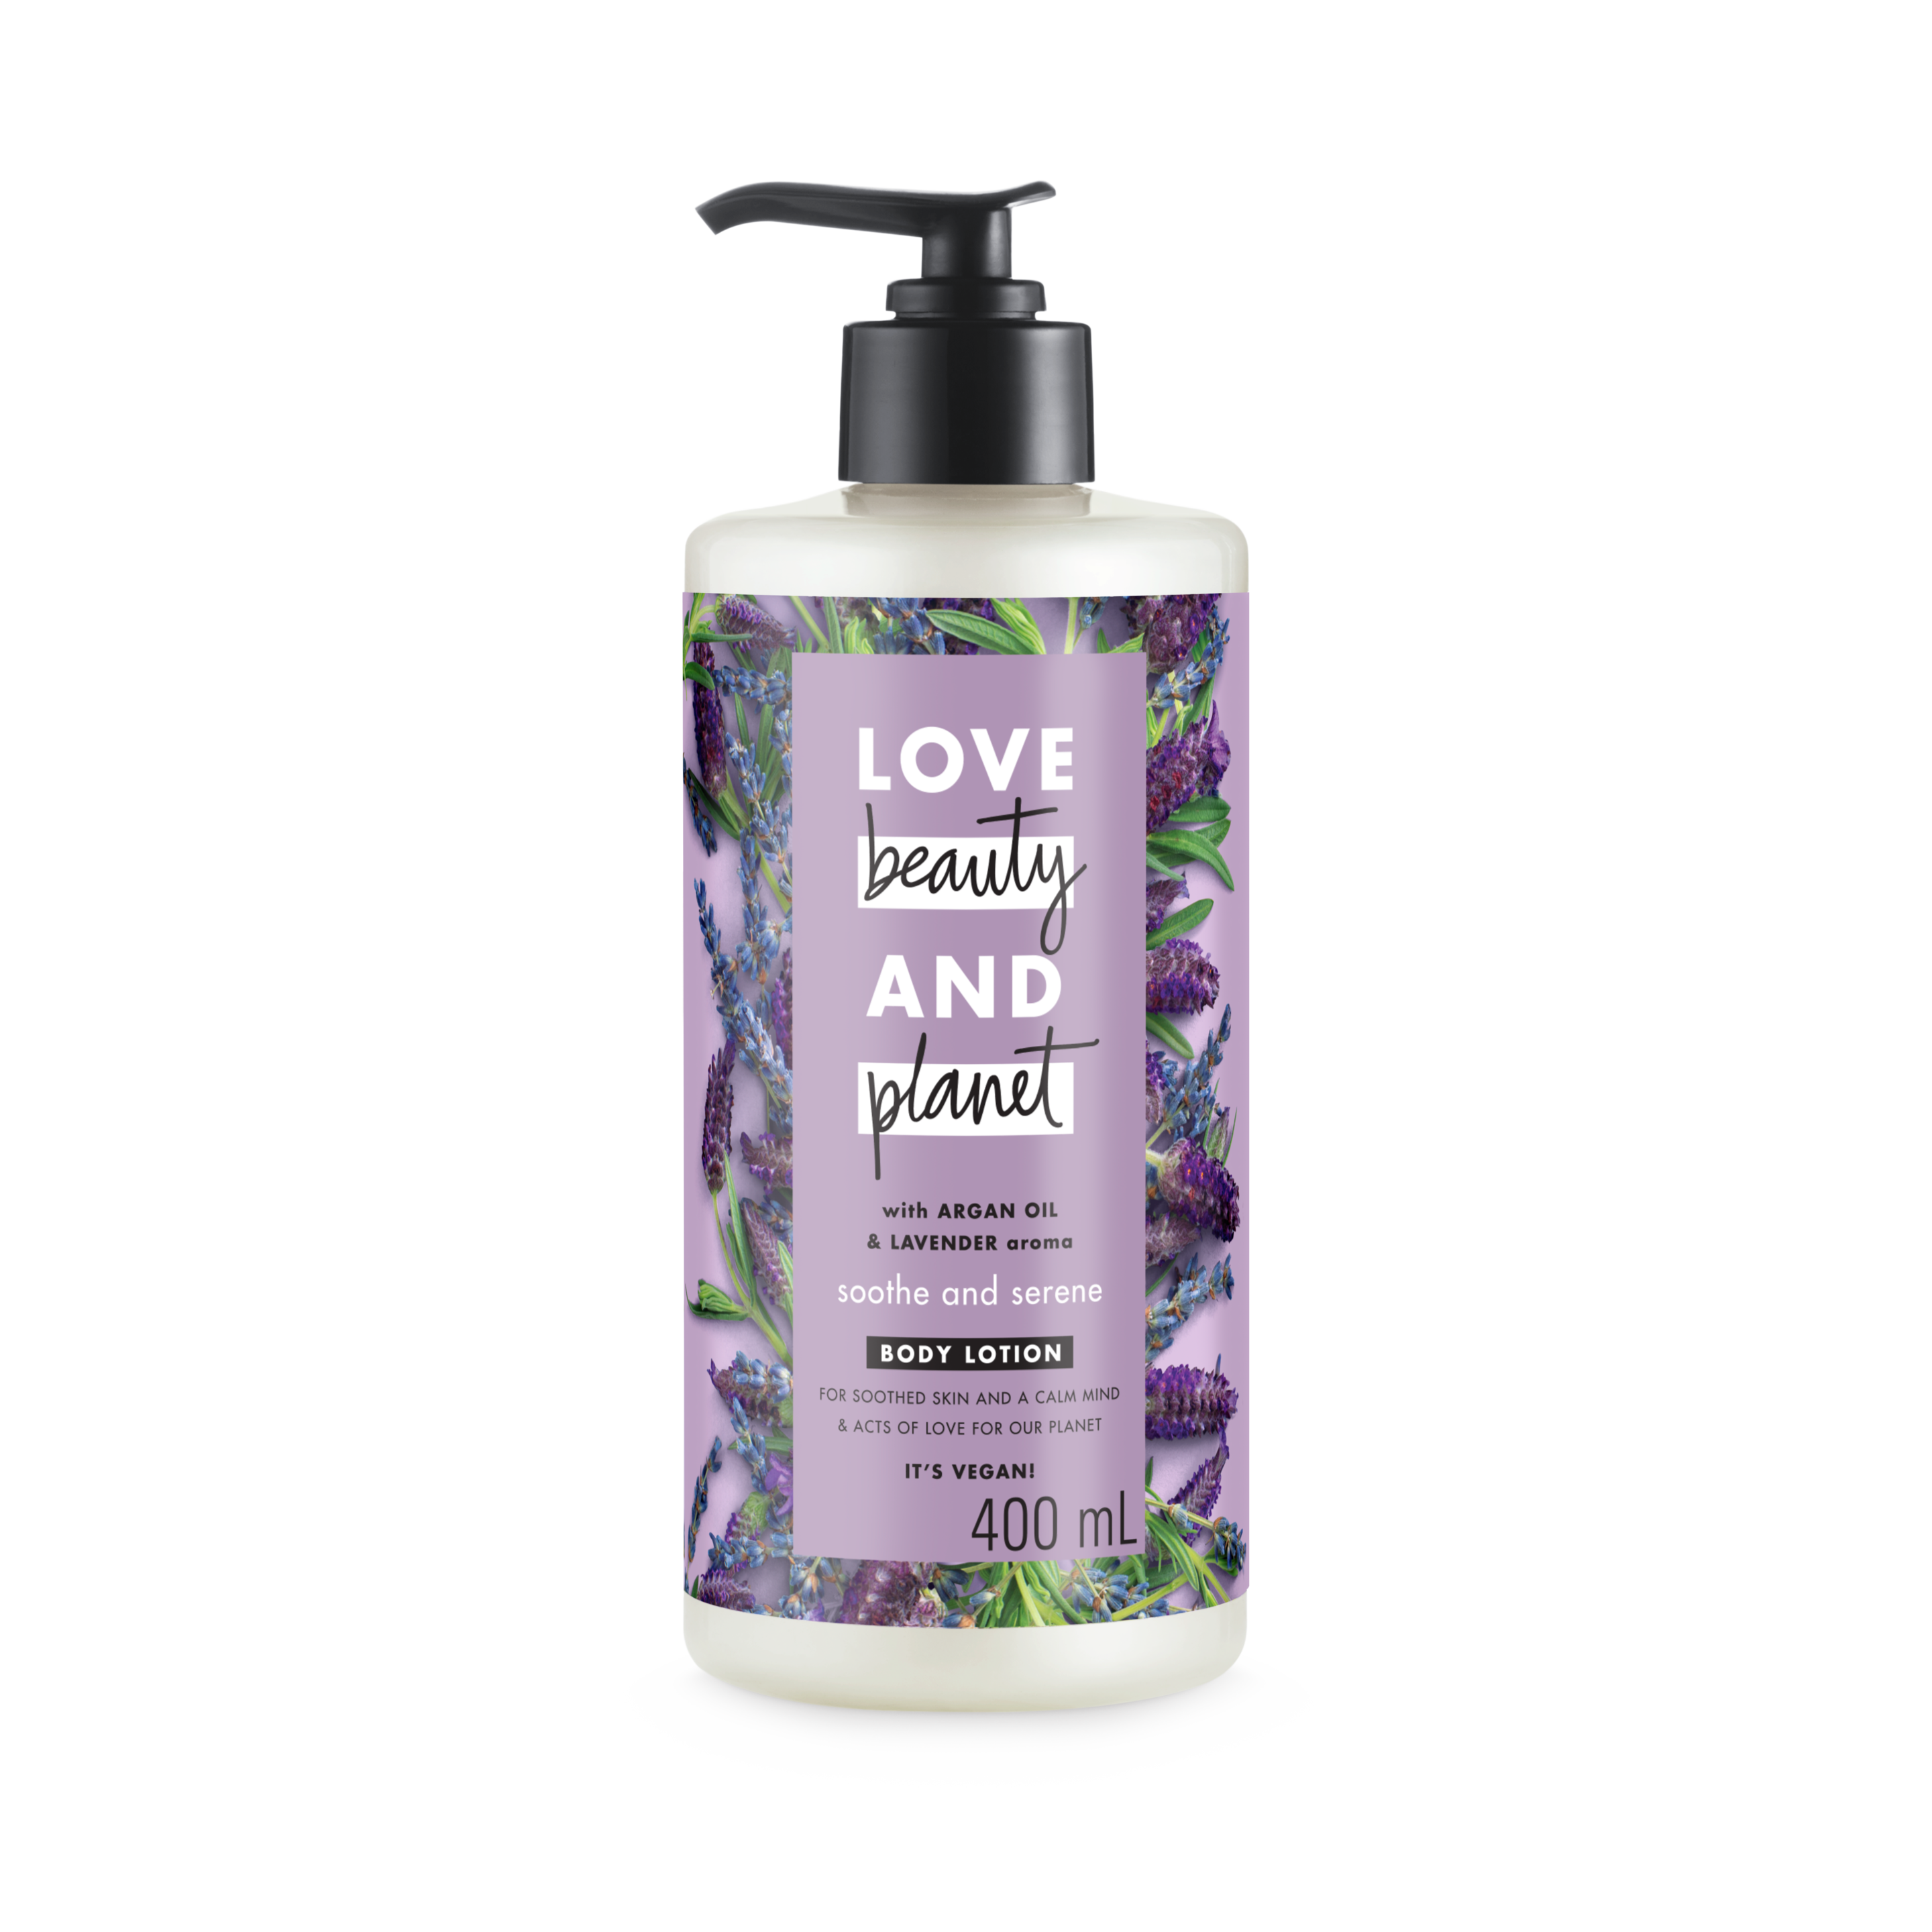 Bagian belakang kemasan Love Beauty and Planet Argan Oil & Lavender Body Lotion ukuran 400 ml